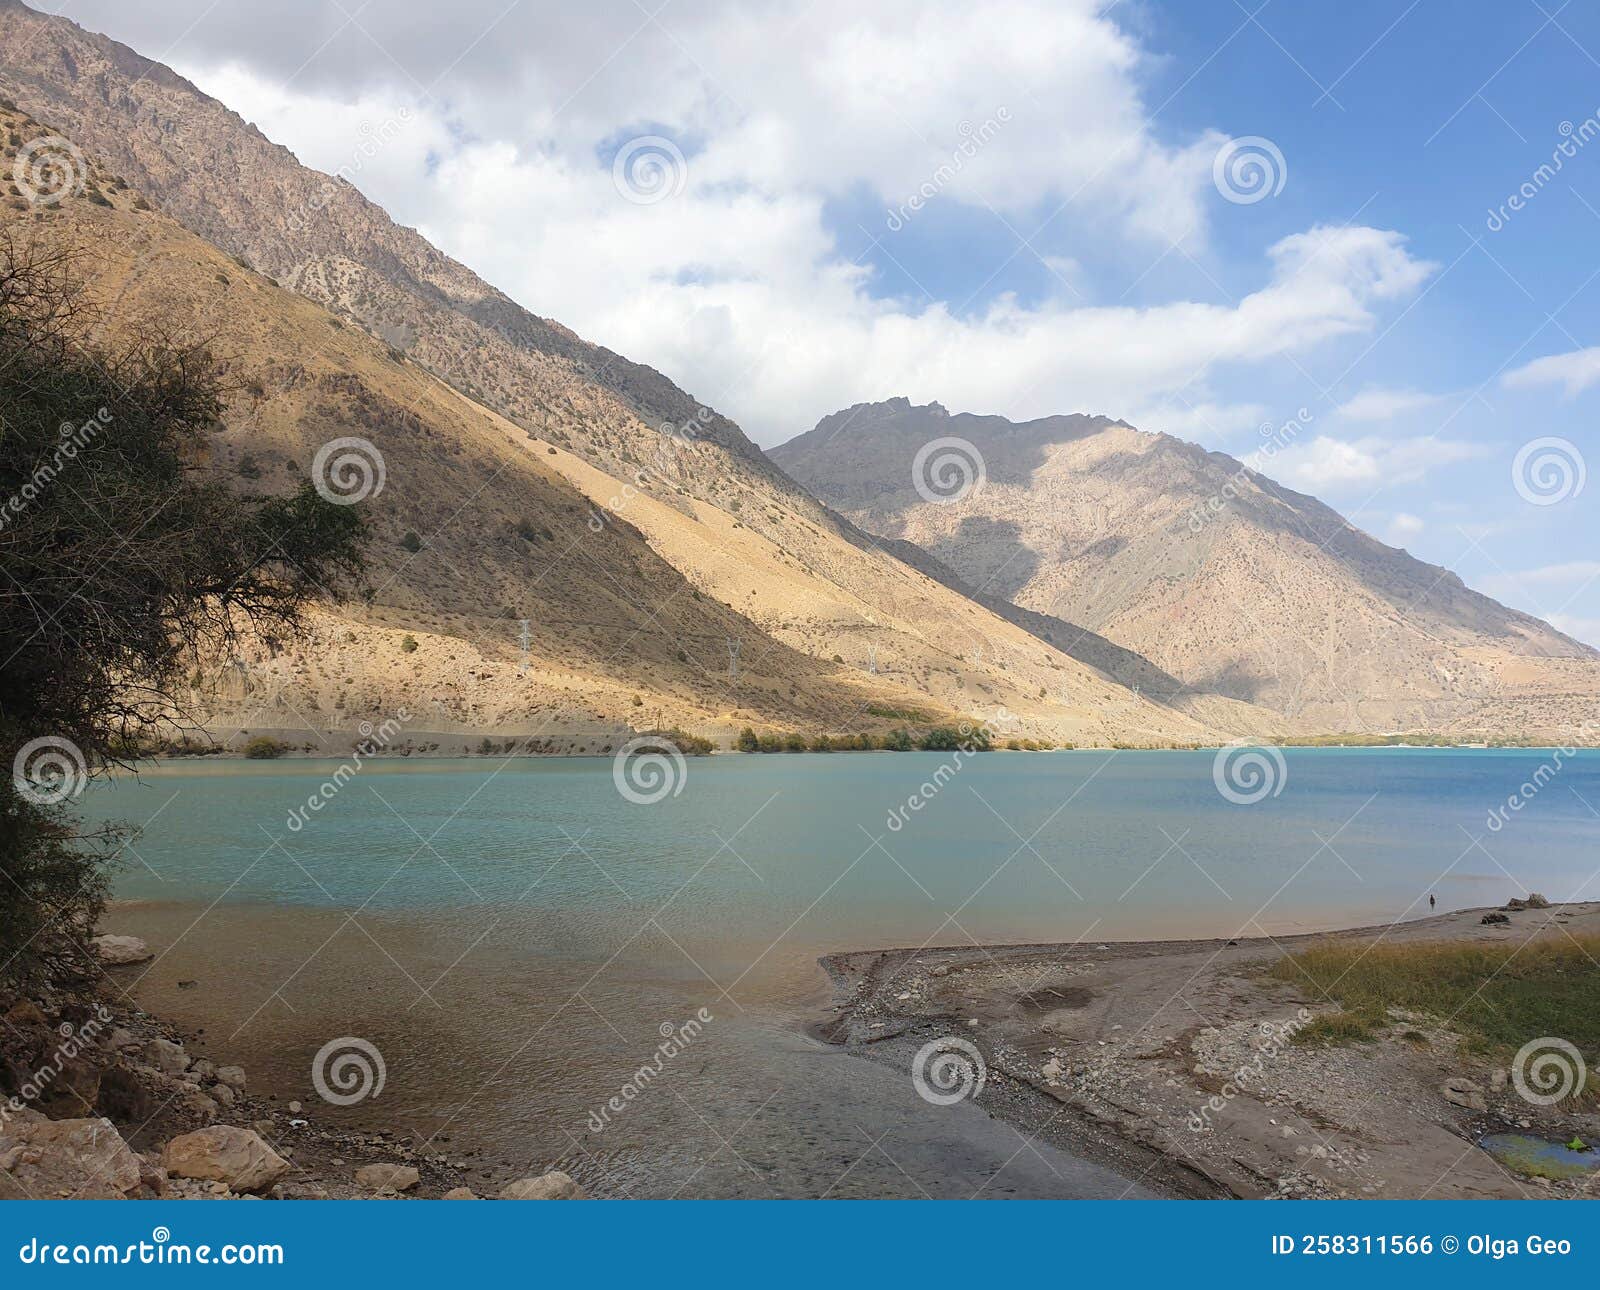 mountain lake iskanderkul tajikistan